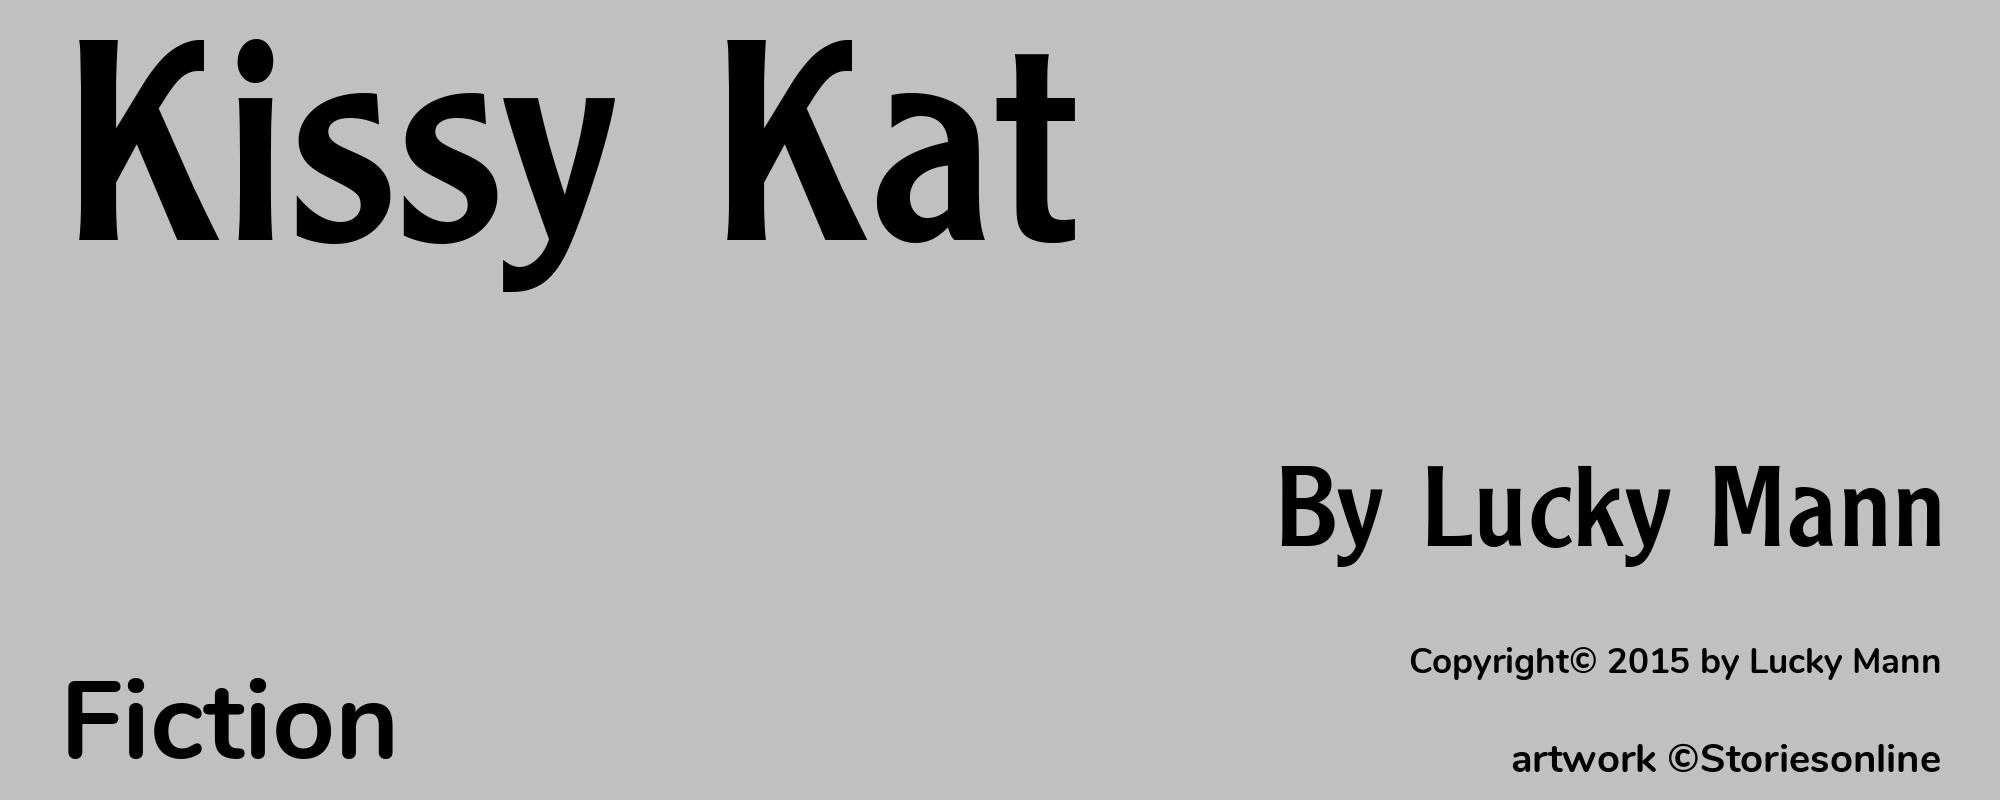 Kissy Kat - Cover